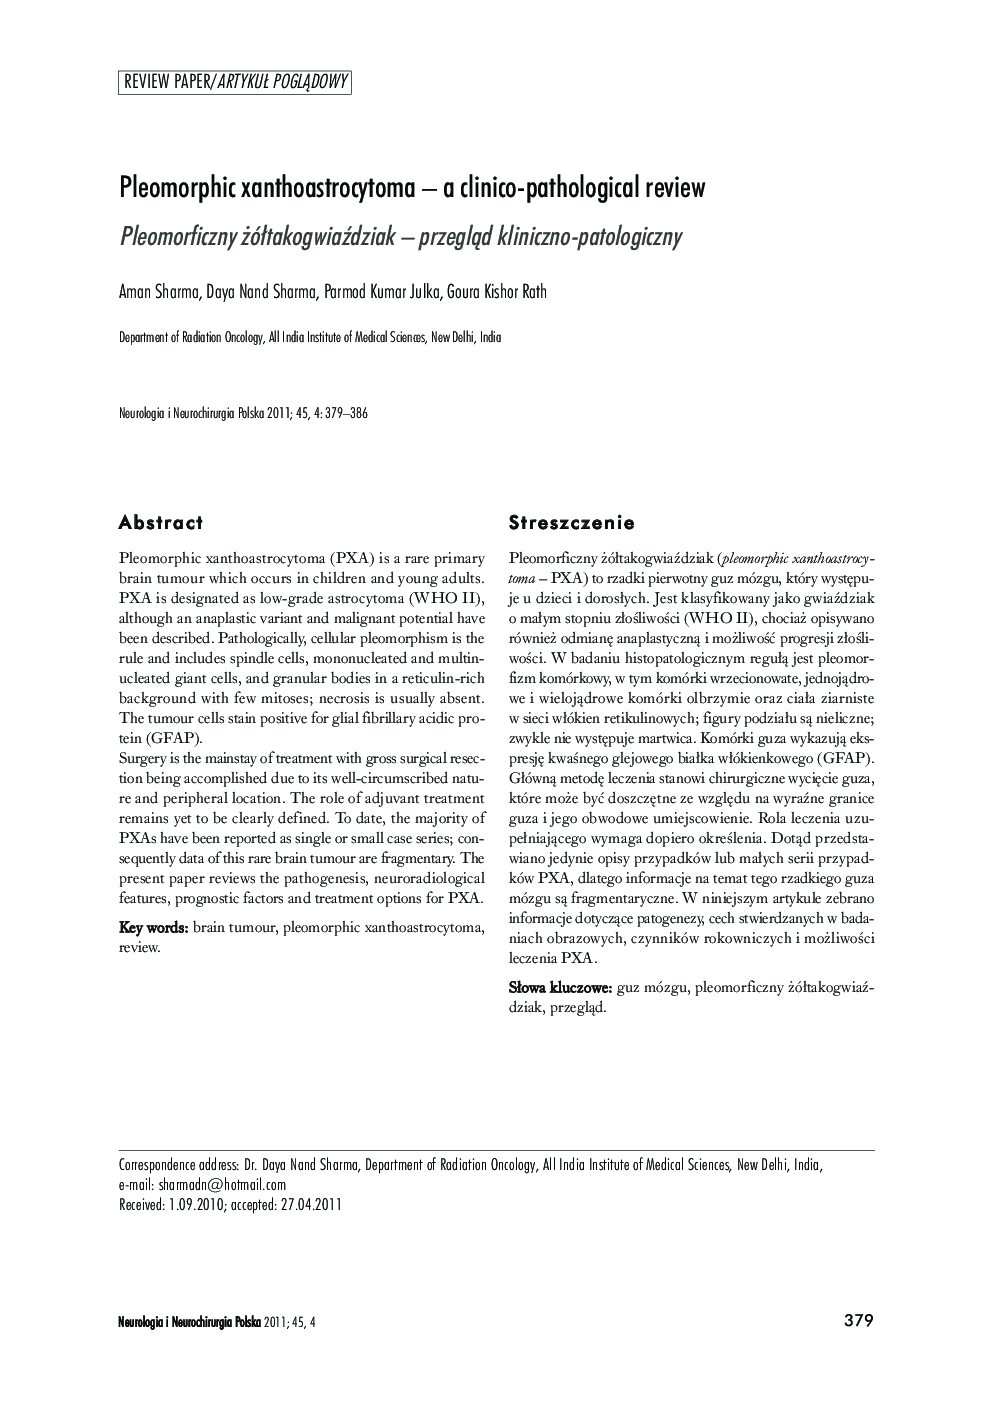 Pleomorphic xanthoastrocytoma - a clinico-pathological review